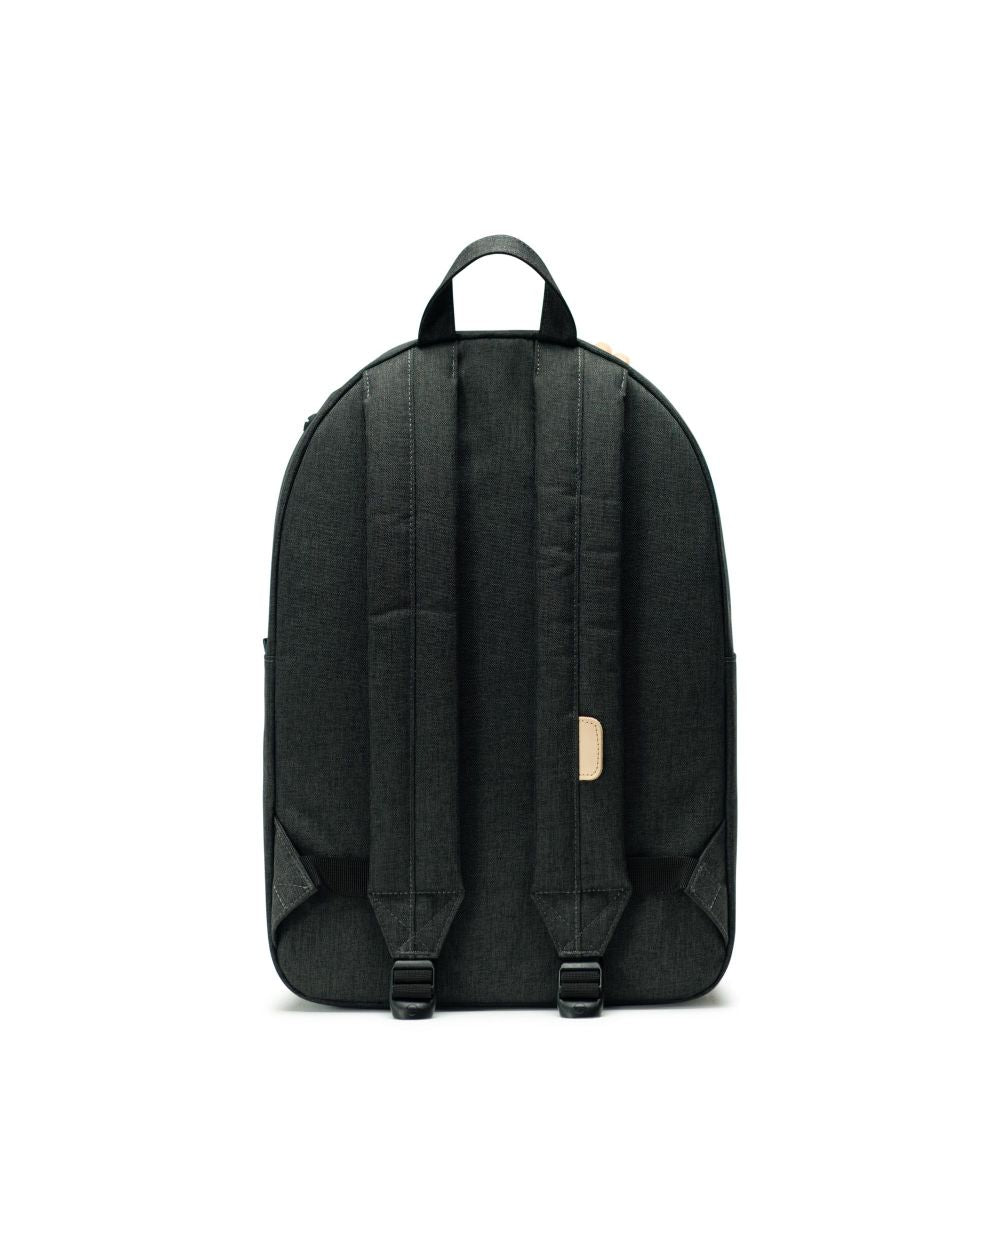 Herschel Supply Co. - Heritage Backpack, Black/Black Crosshatch